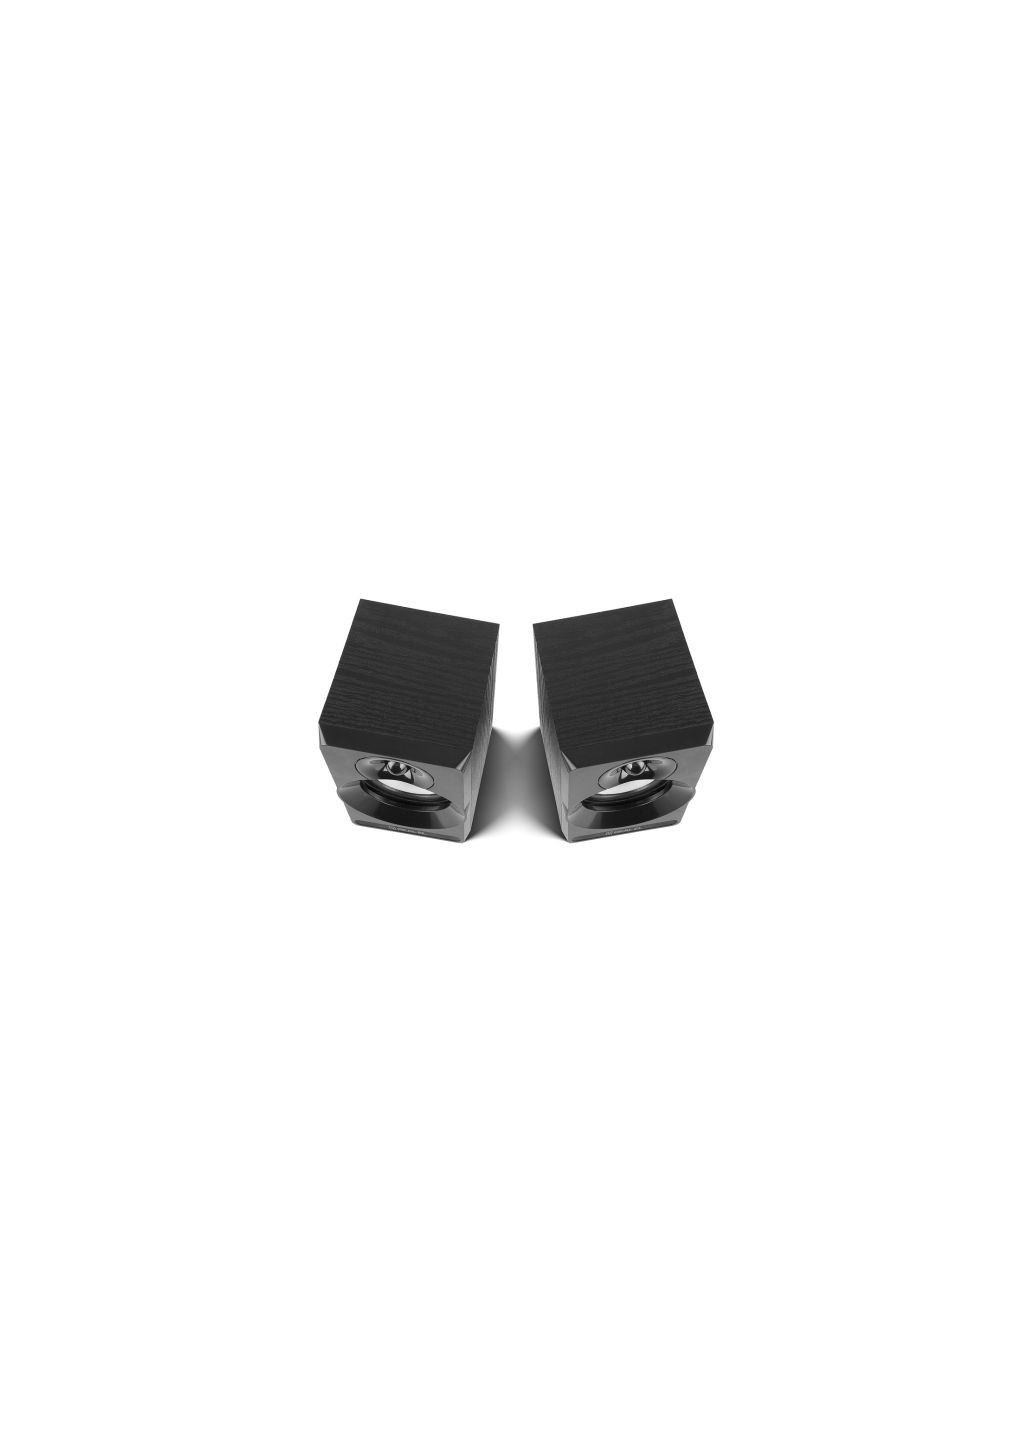 Акустическая система S200 USB Black Real-El s-200 usb black (275077122)